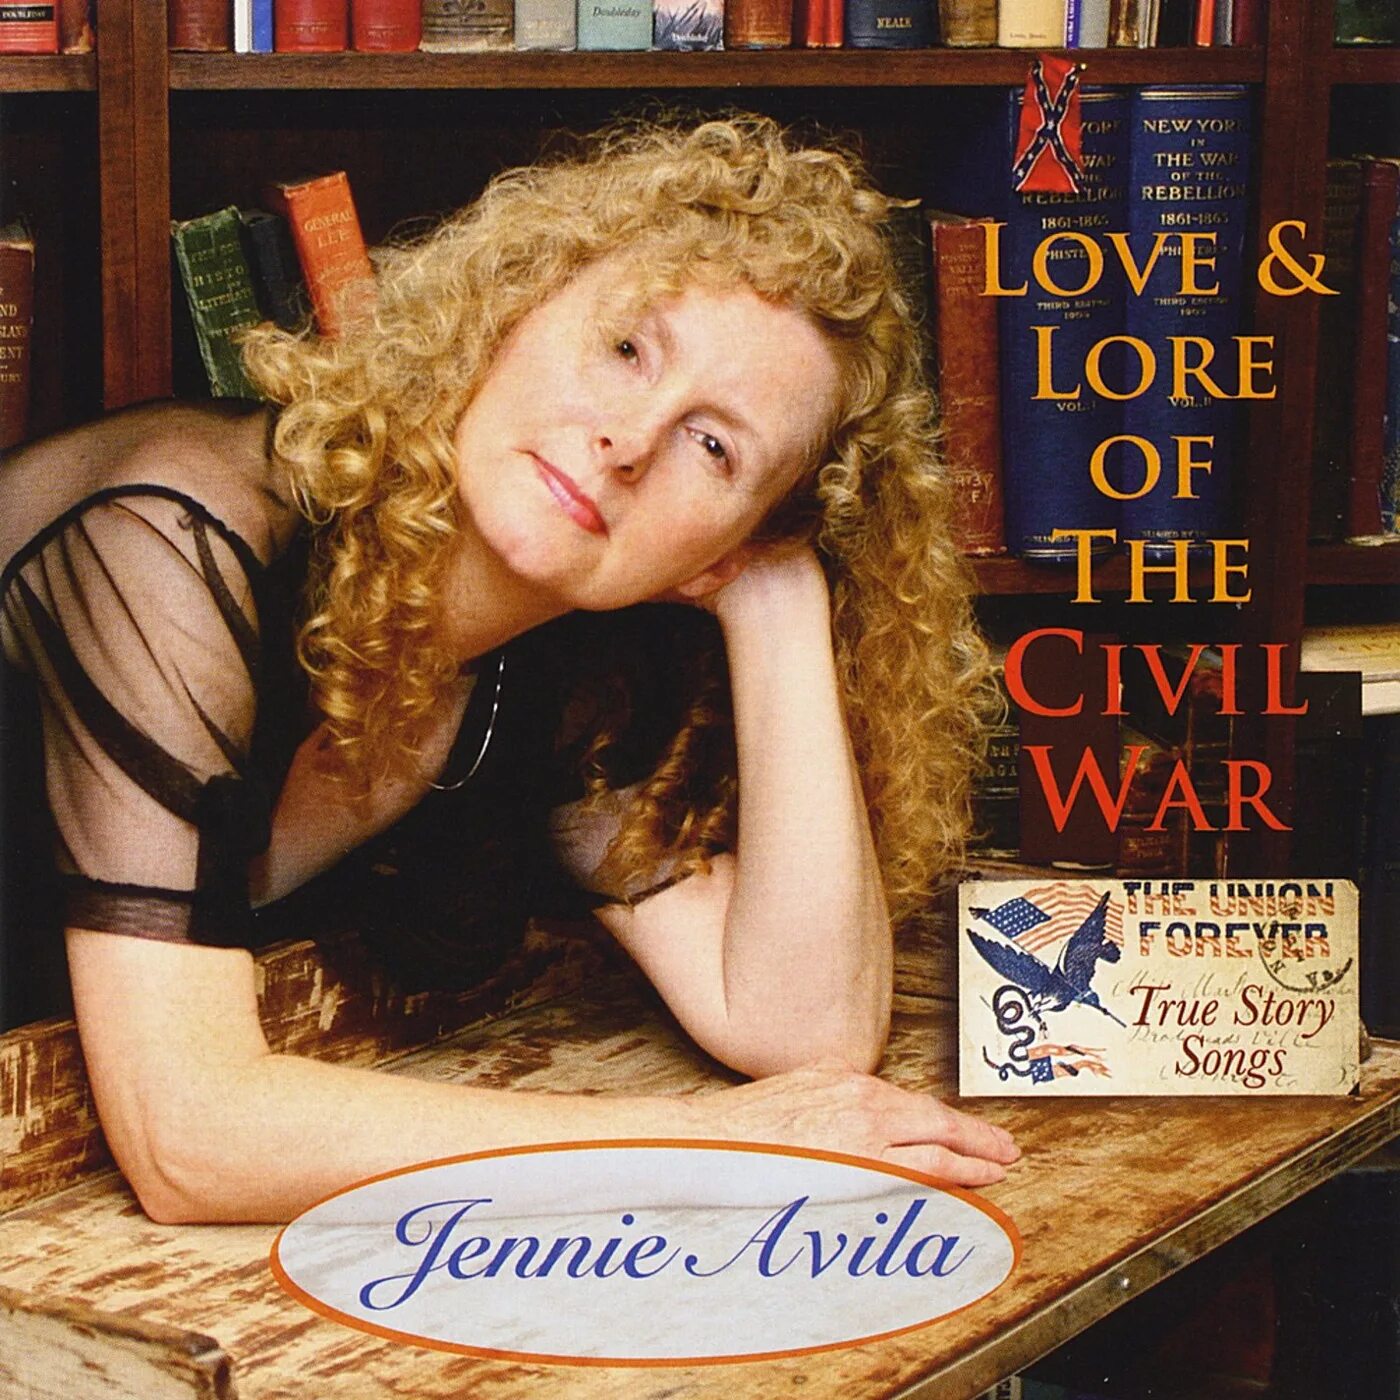 Jennie the album. Avila Luv. Jenny album. Lorelove. Love lore